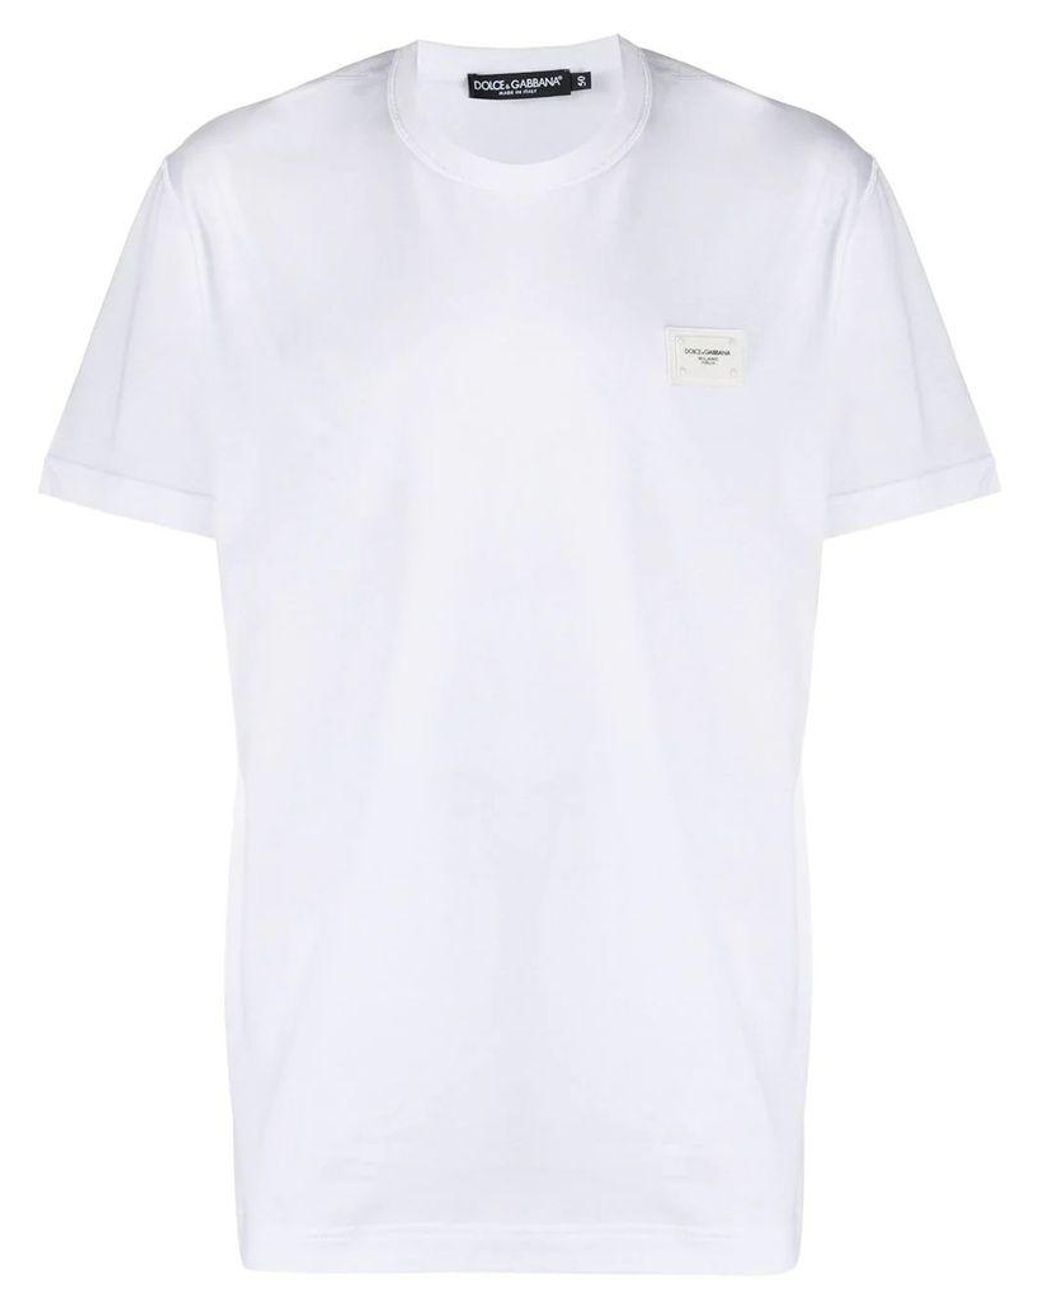 alias Voorspeller 鍔 Dolce & Gabbana Dolce E Gabbana Cotton T-shirt in White for Men - Lyst